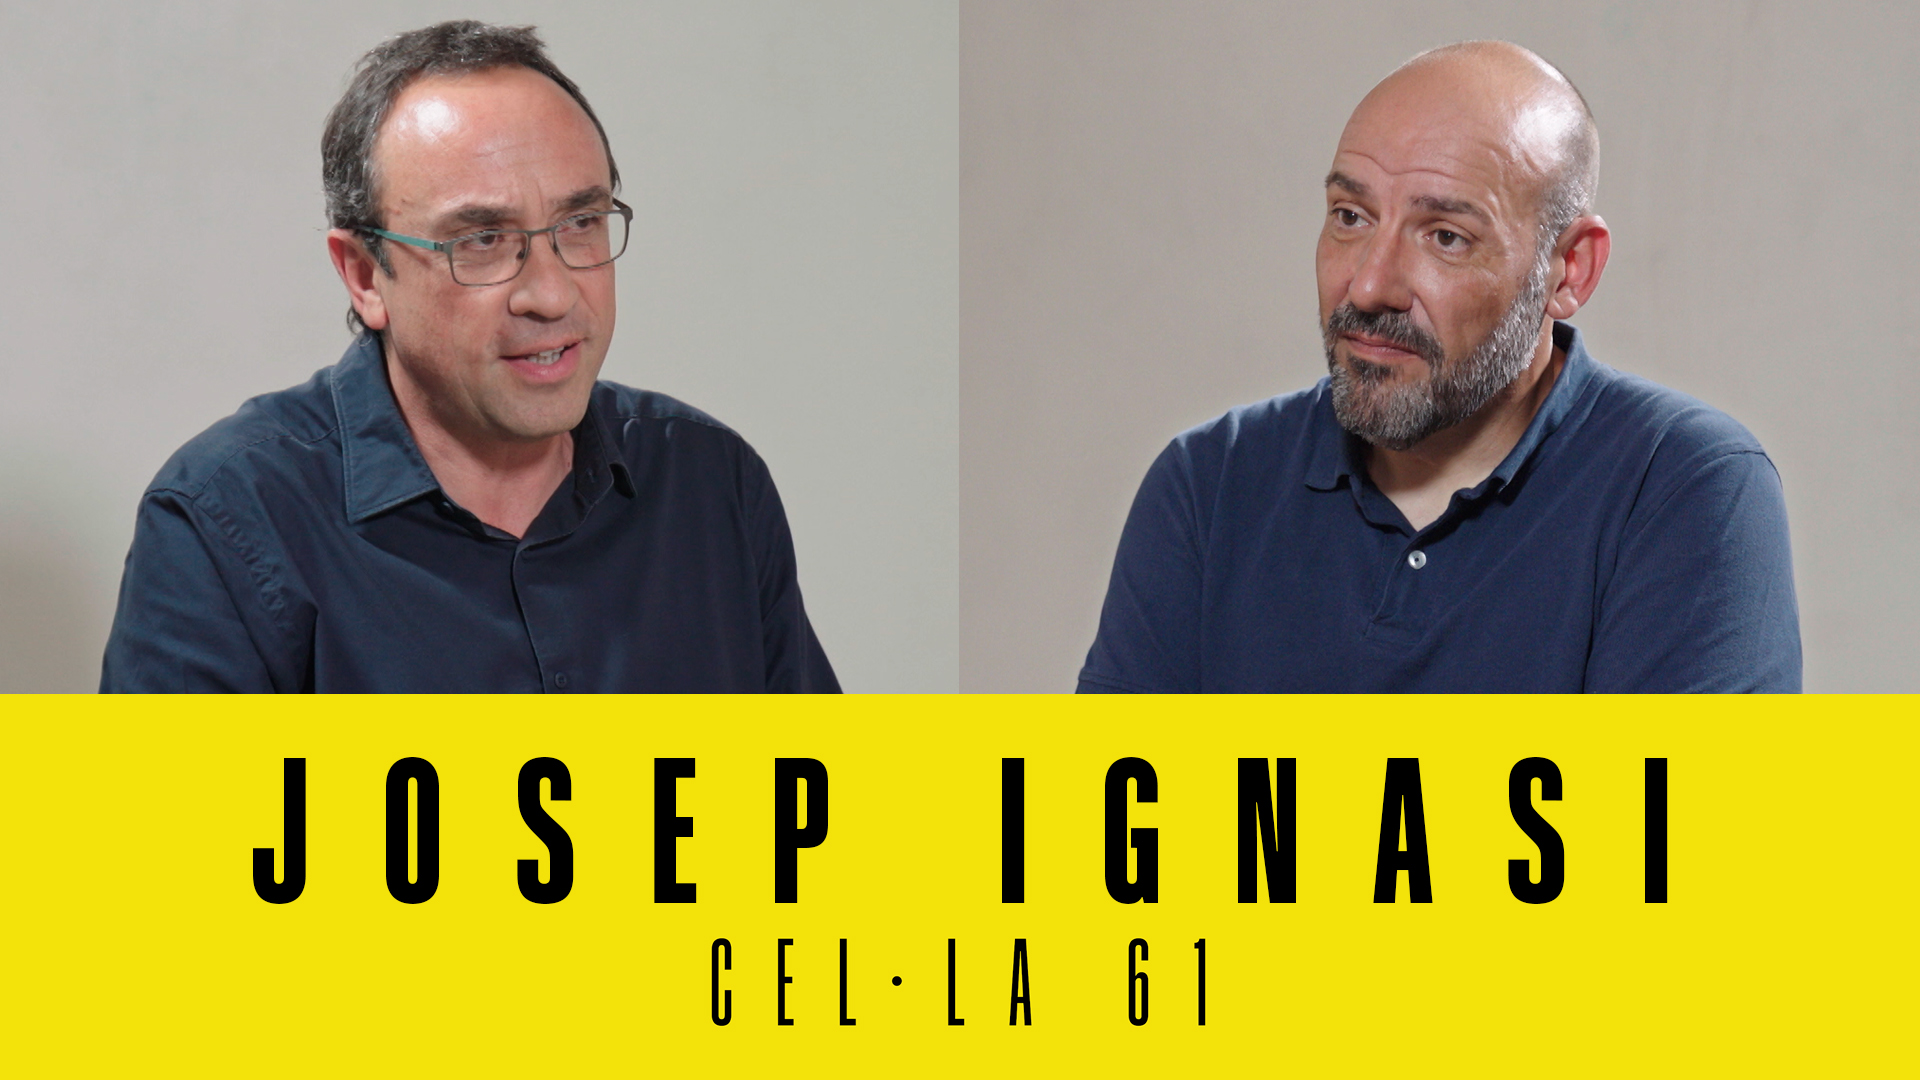 Josep Ignasi - CEL·LA 61